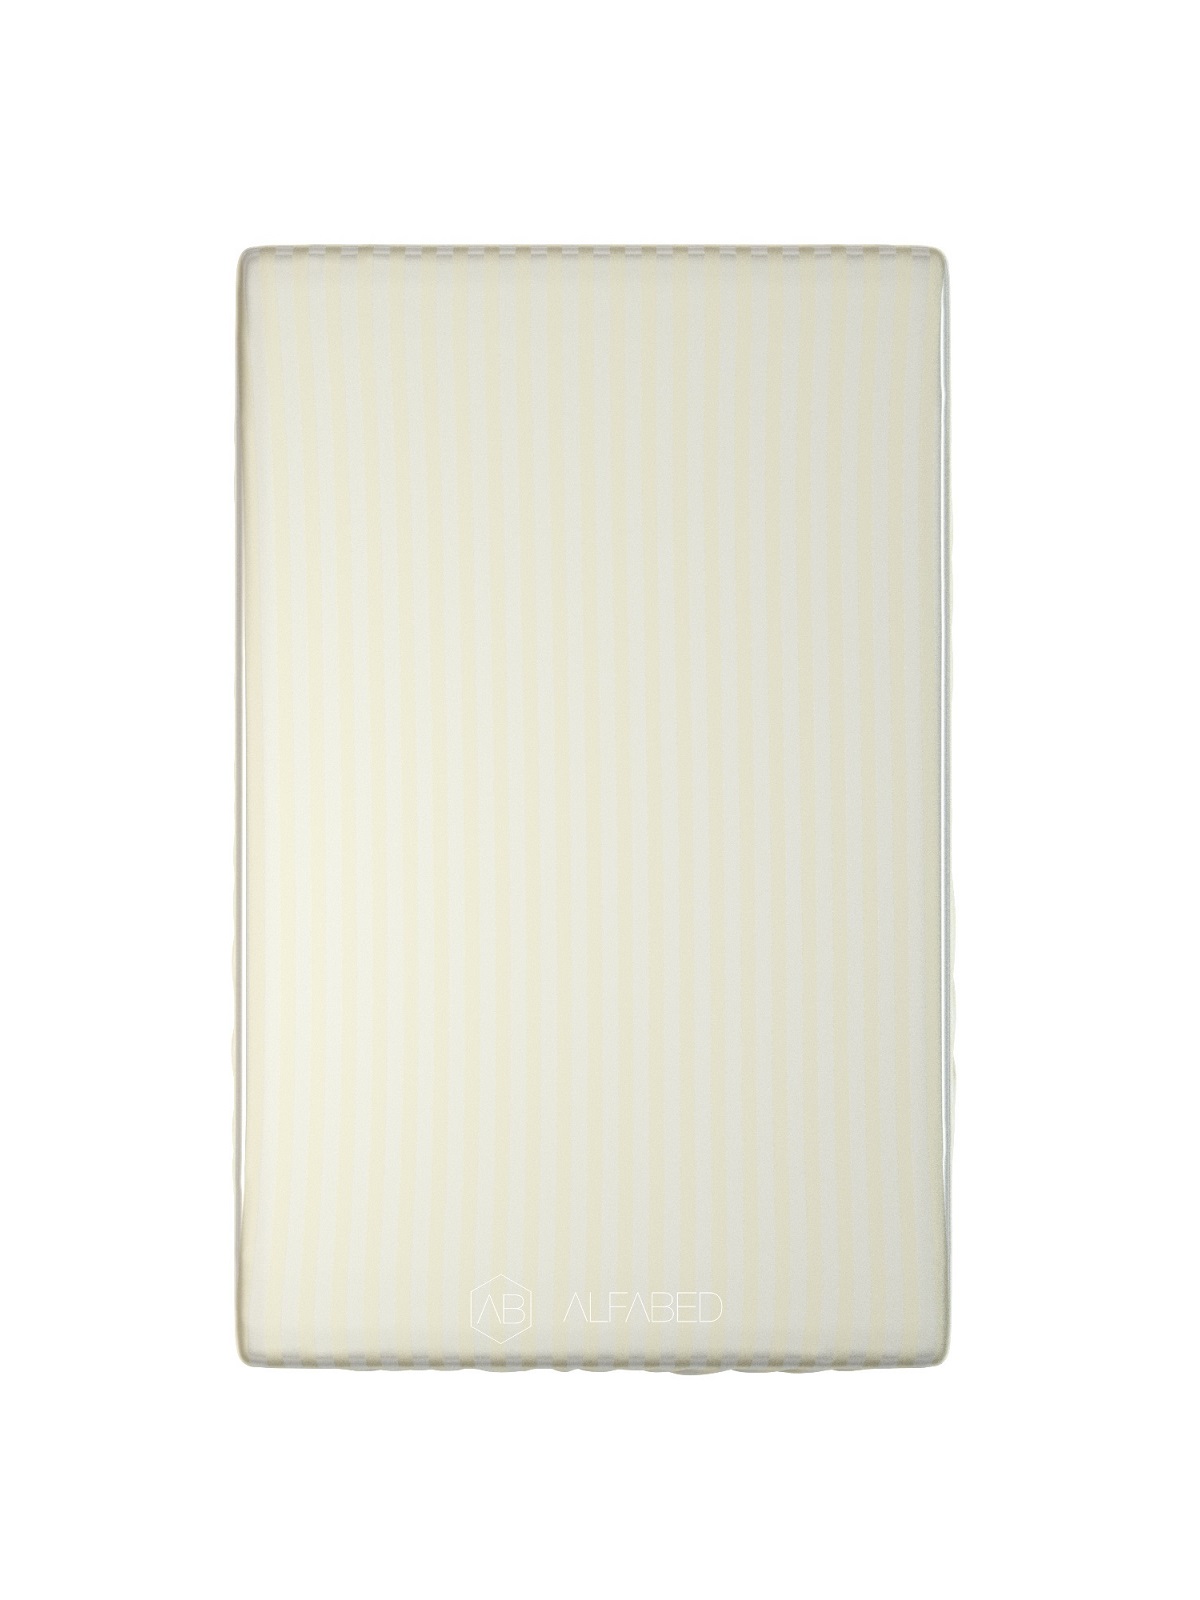 Pillow Top Fitted Sheet Premium Woven Cotton Sateen Stripe Cream V H-51